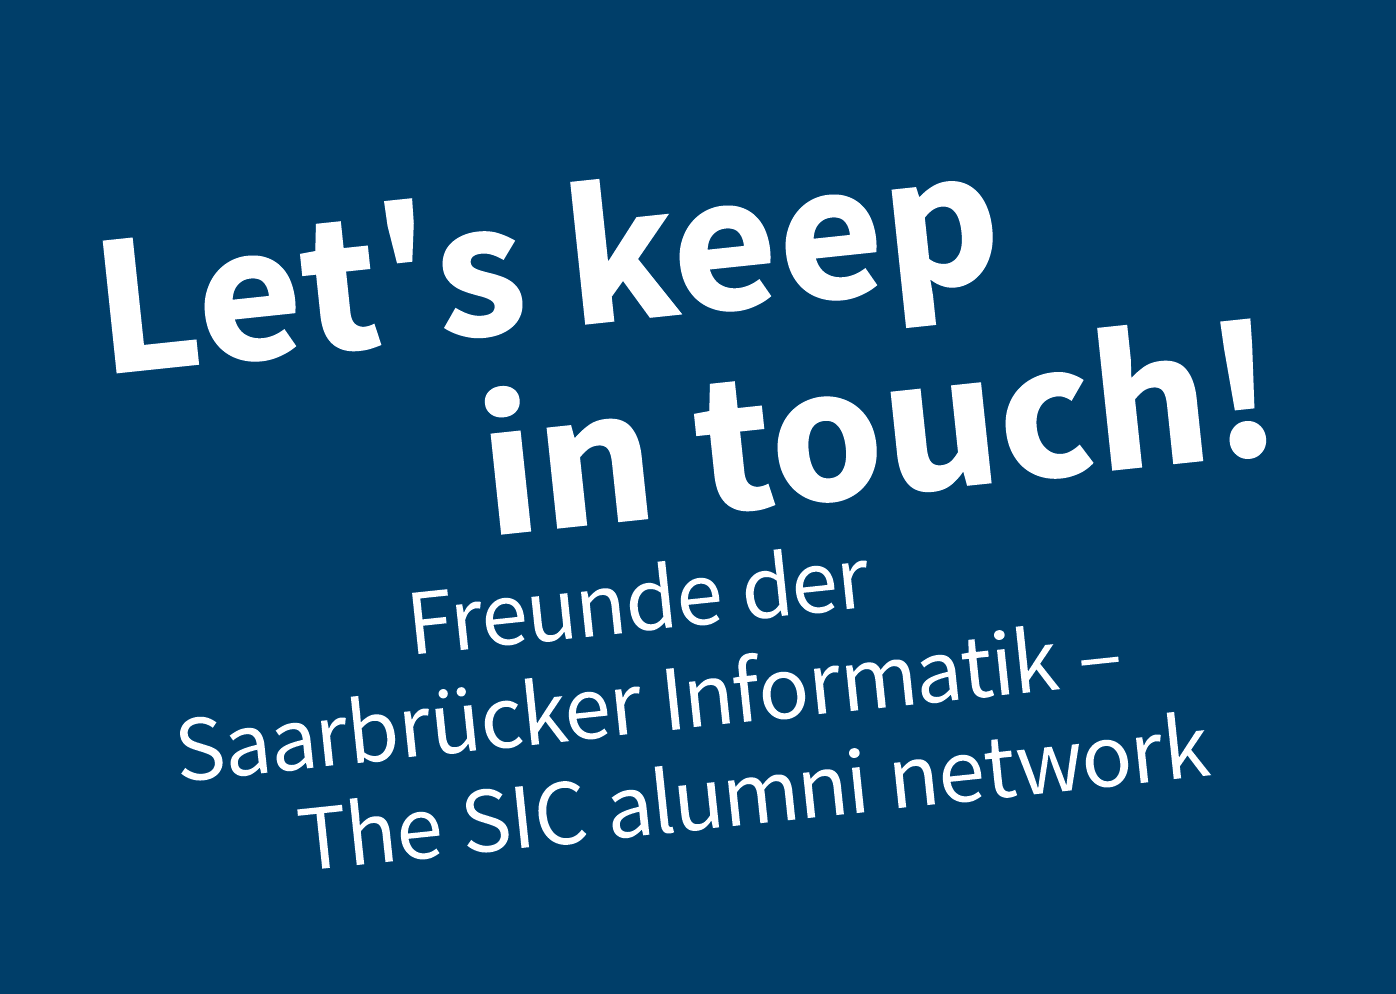 Writing: "Let's keep in touch! Freunde der Saarbrücker Informatik - The SIC alumni network"